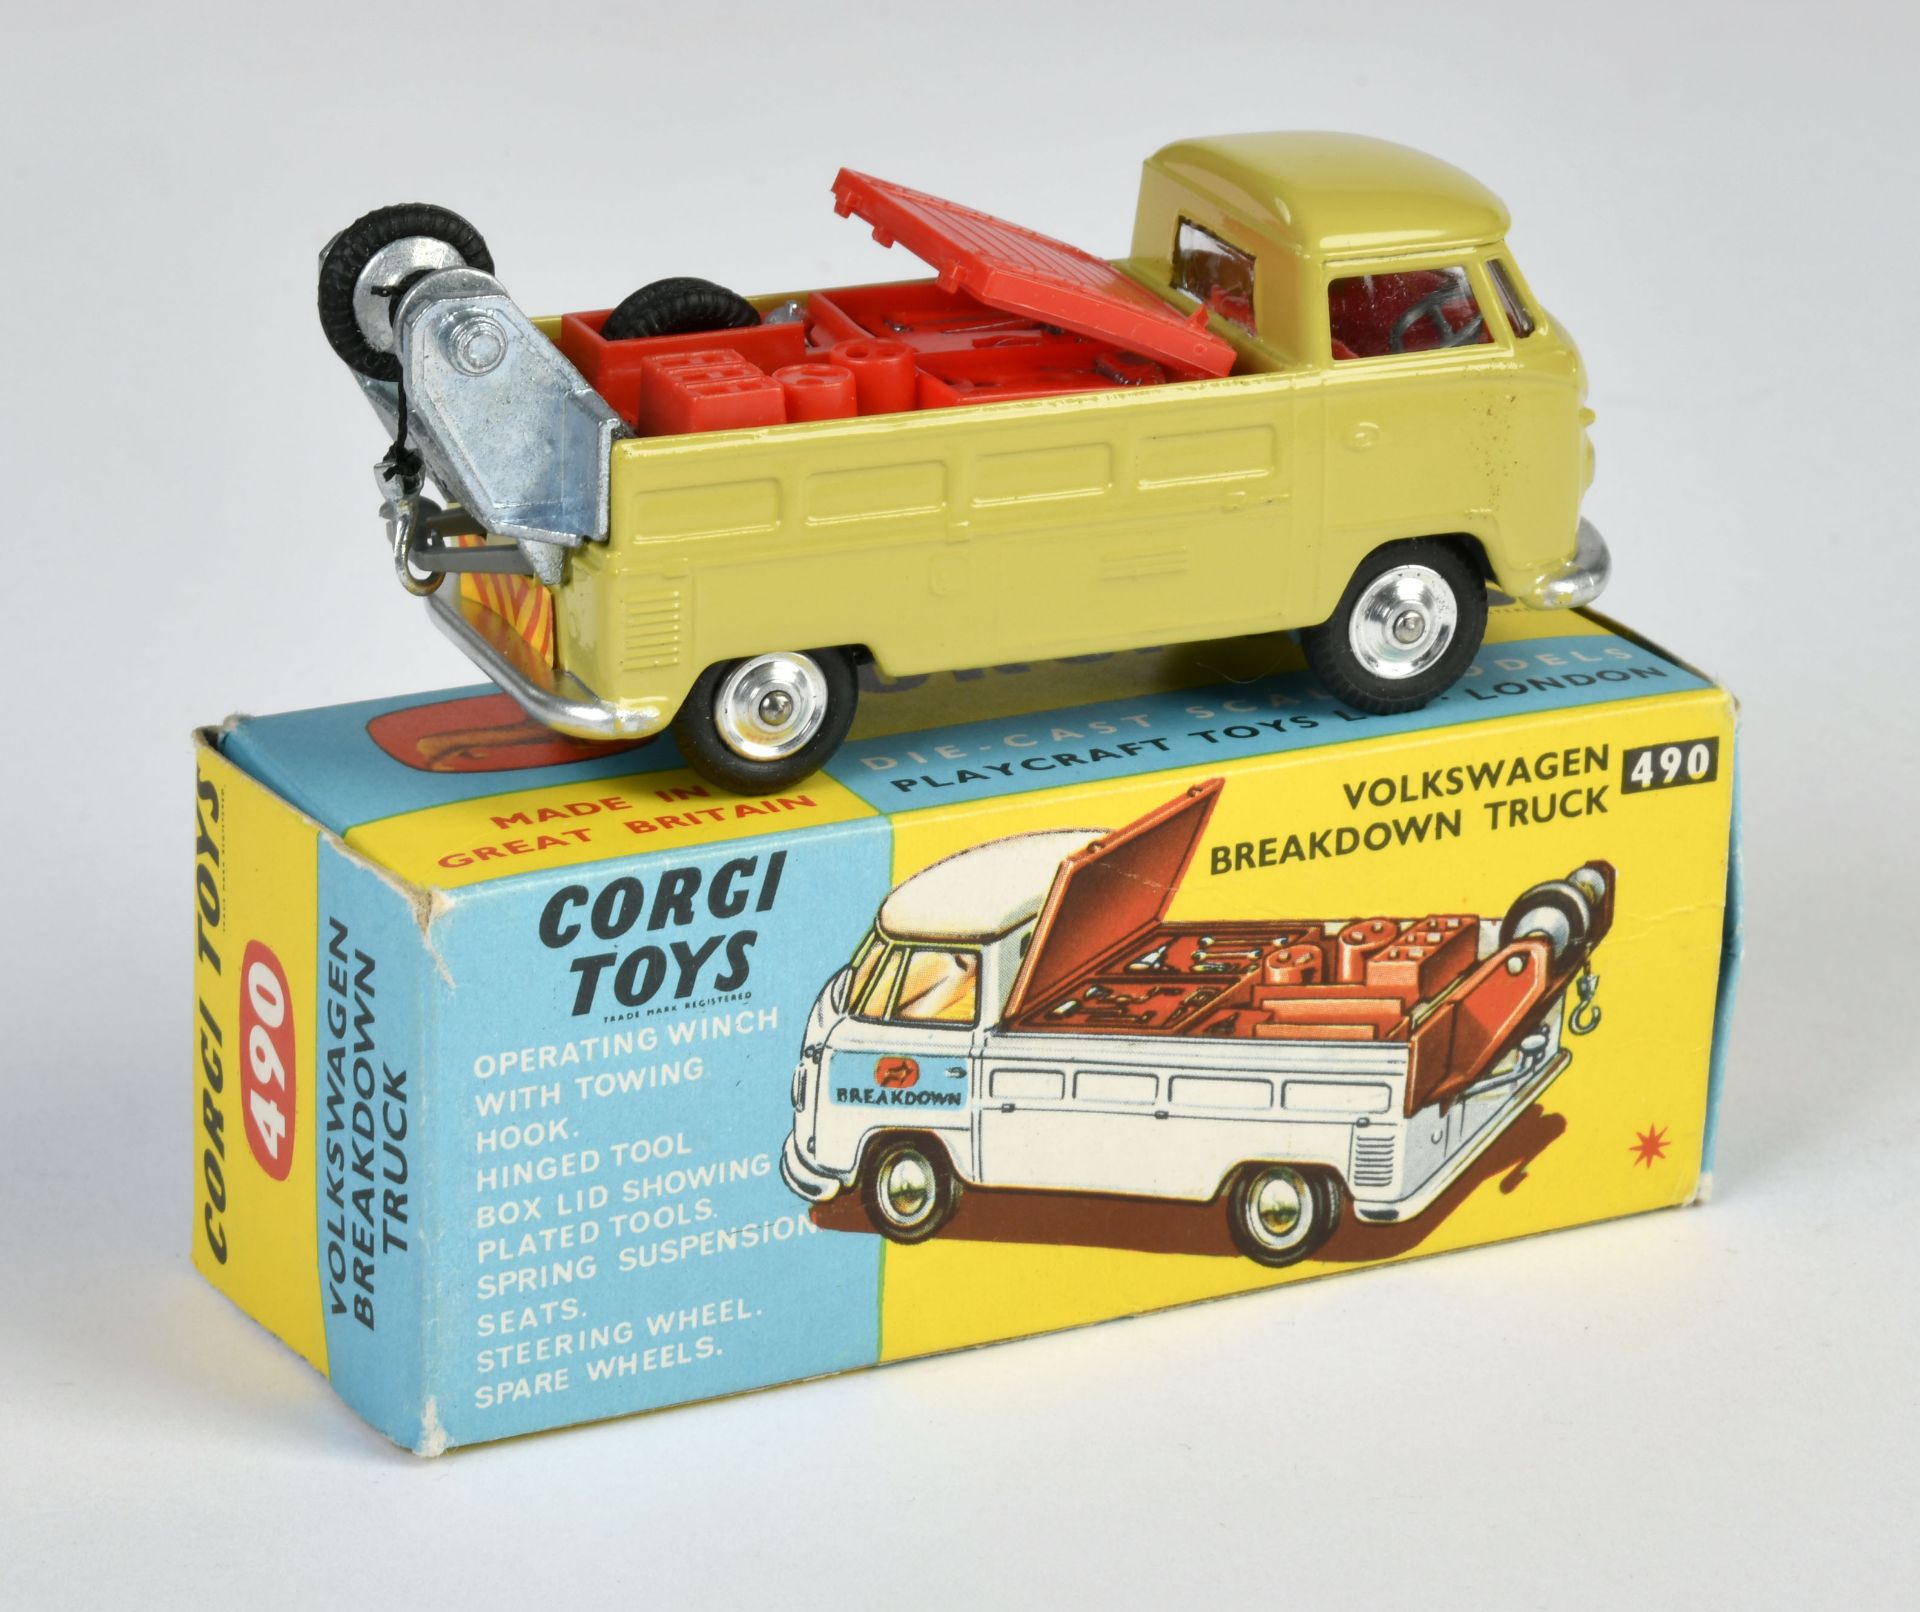 Corgi Toys, 490 Volkswagen, Breakdown, beige, box C 1, C 1 - Image 2 of 2